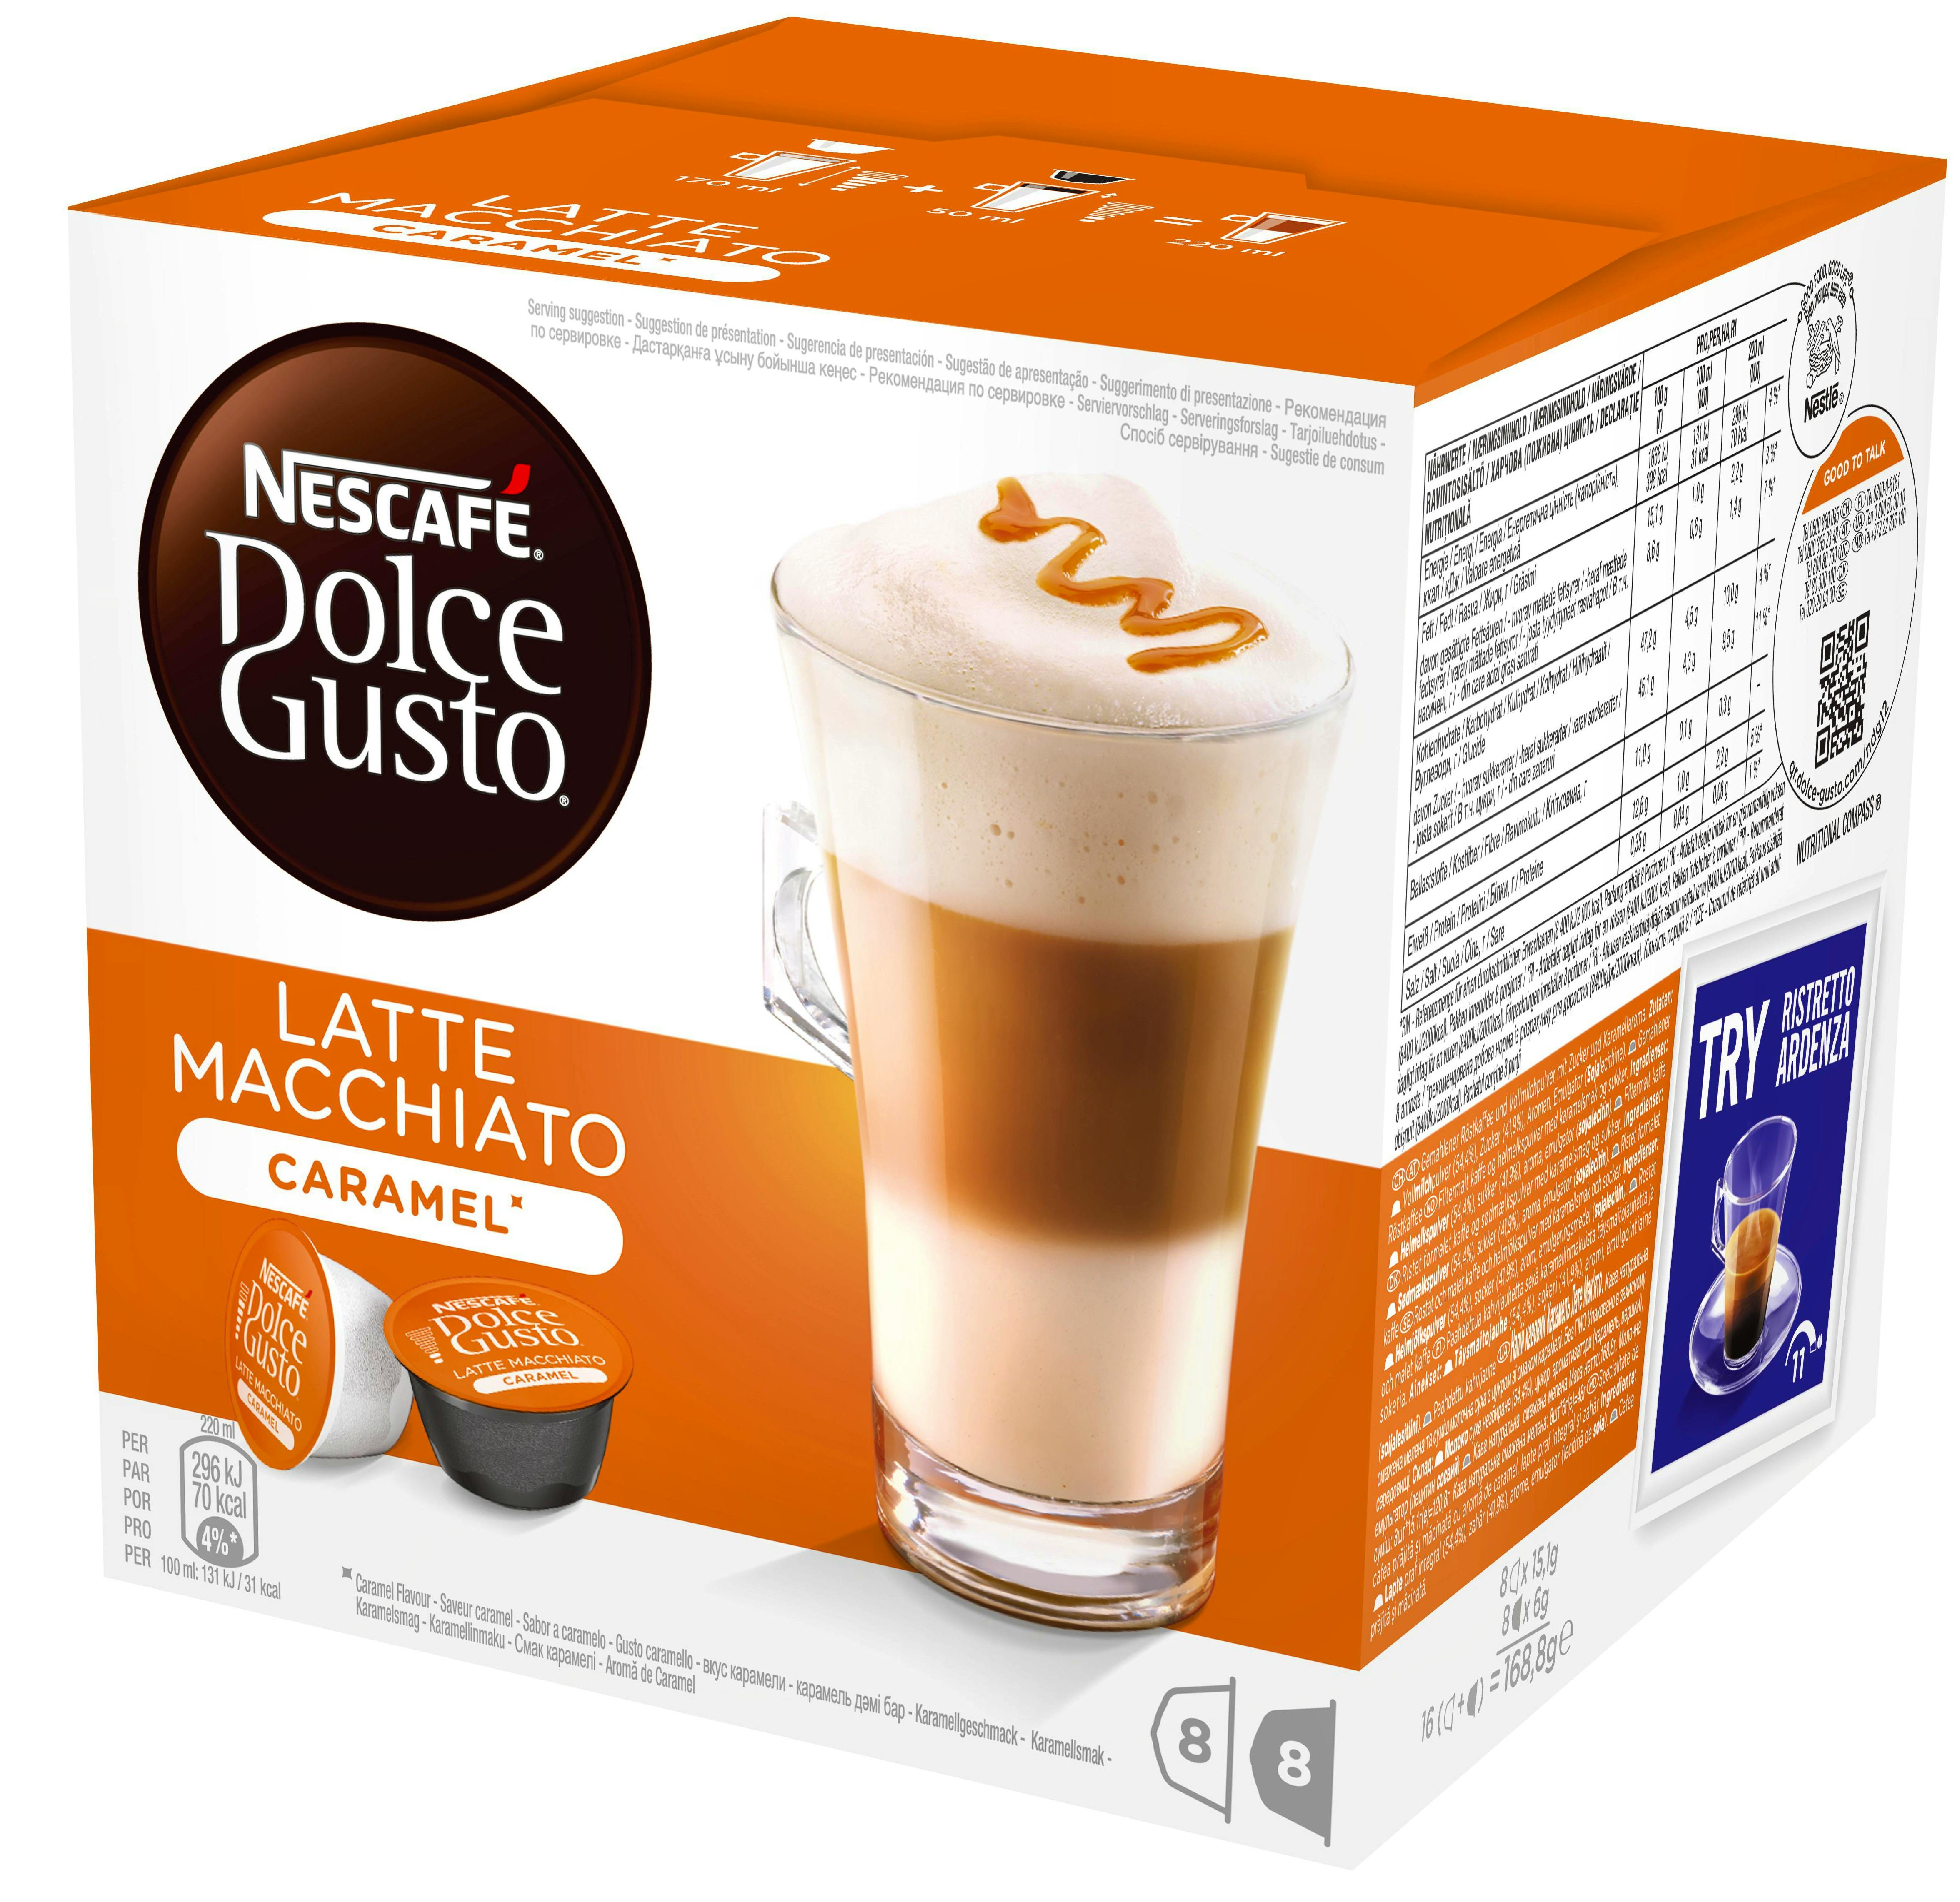 Nescafe Dolce Gusto Latte Caramel Macchiato 16 st - 7.59 EUR 